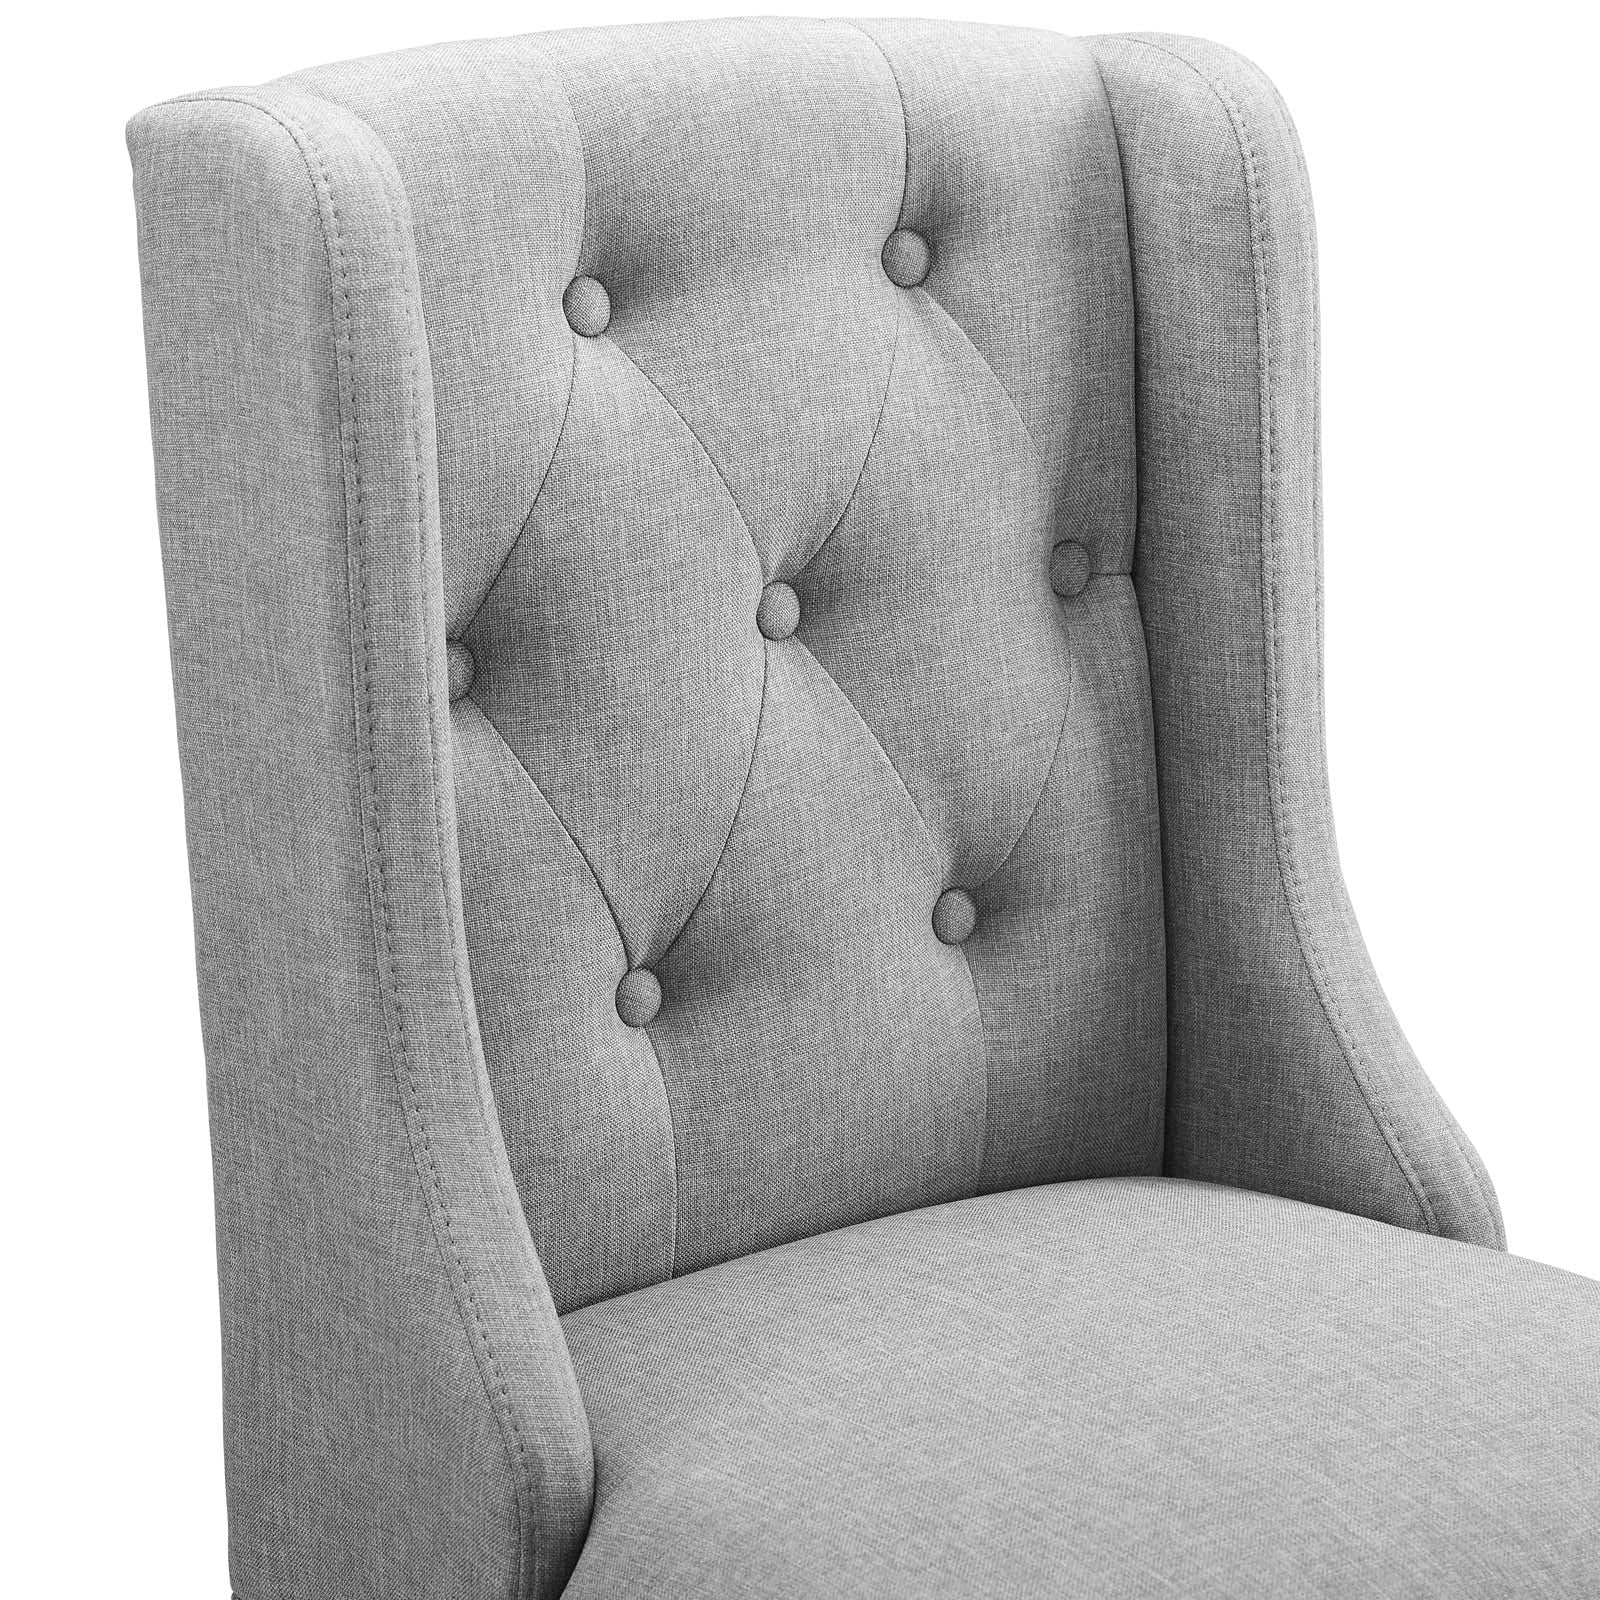 Baronet Counter Bar Stool Upholstered Fabric Set of 2 - East Shore Modern Home Furnishings